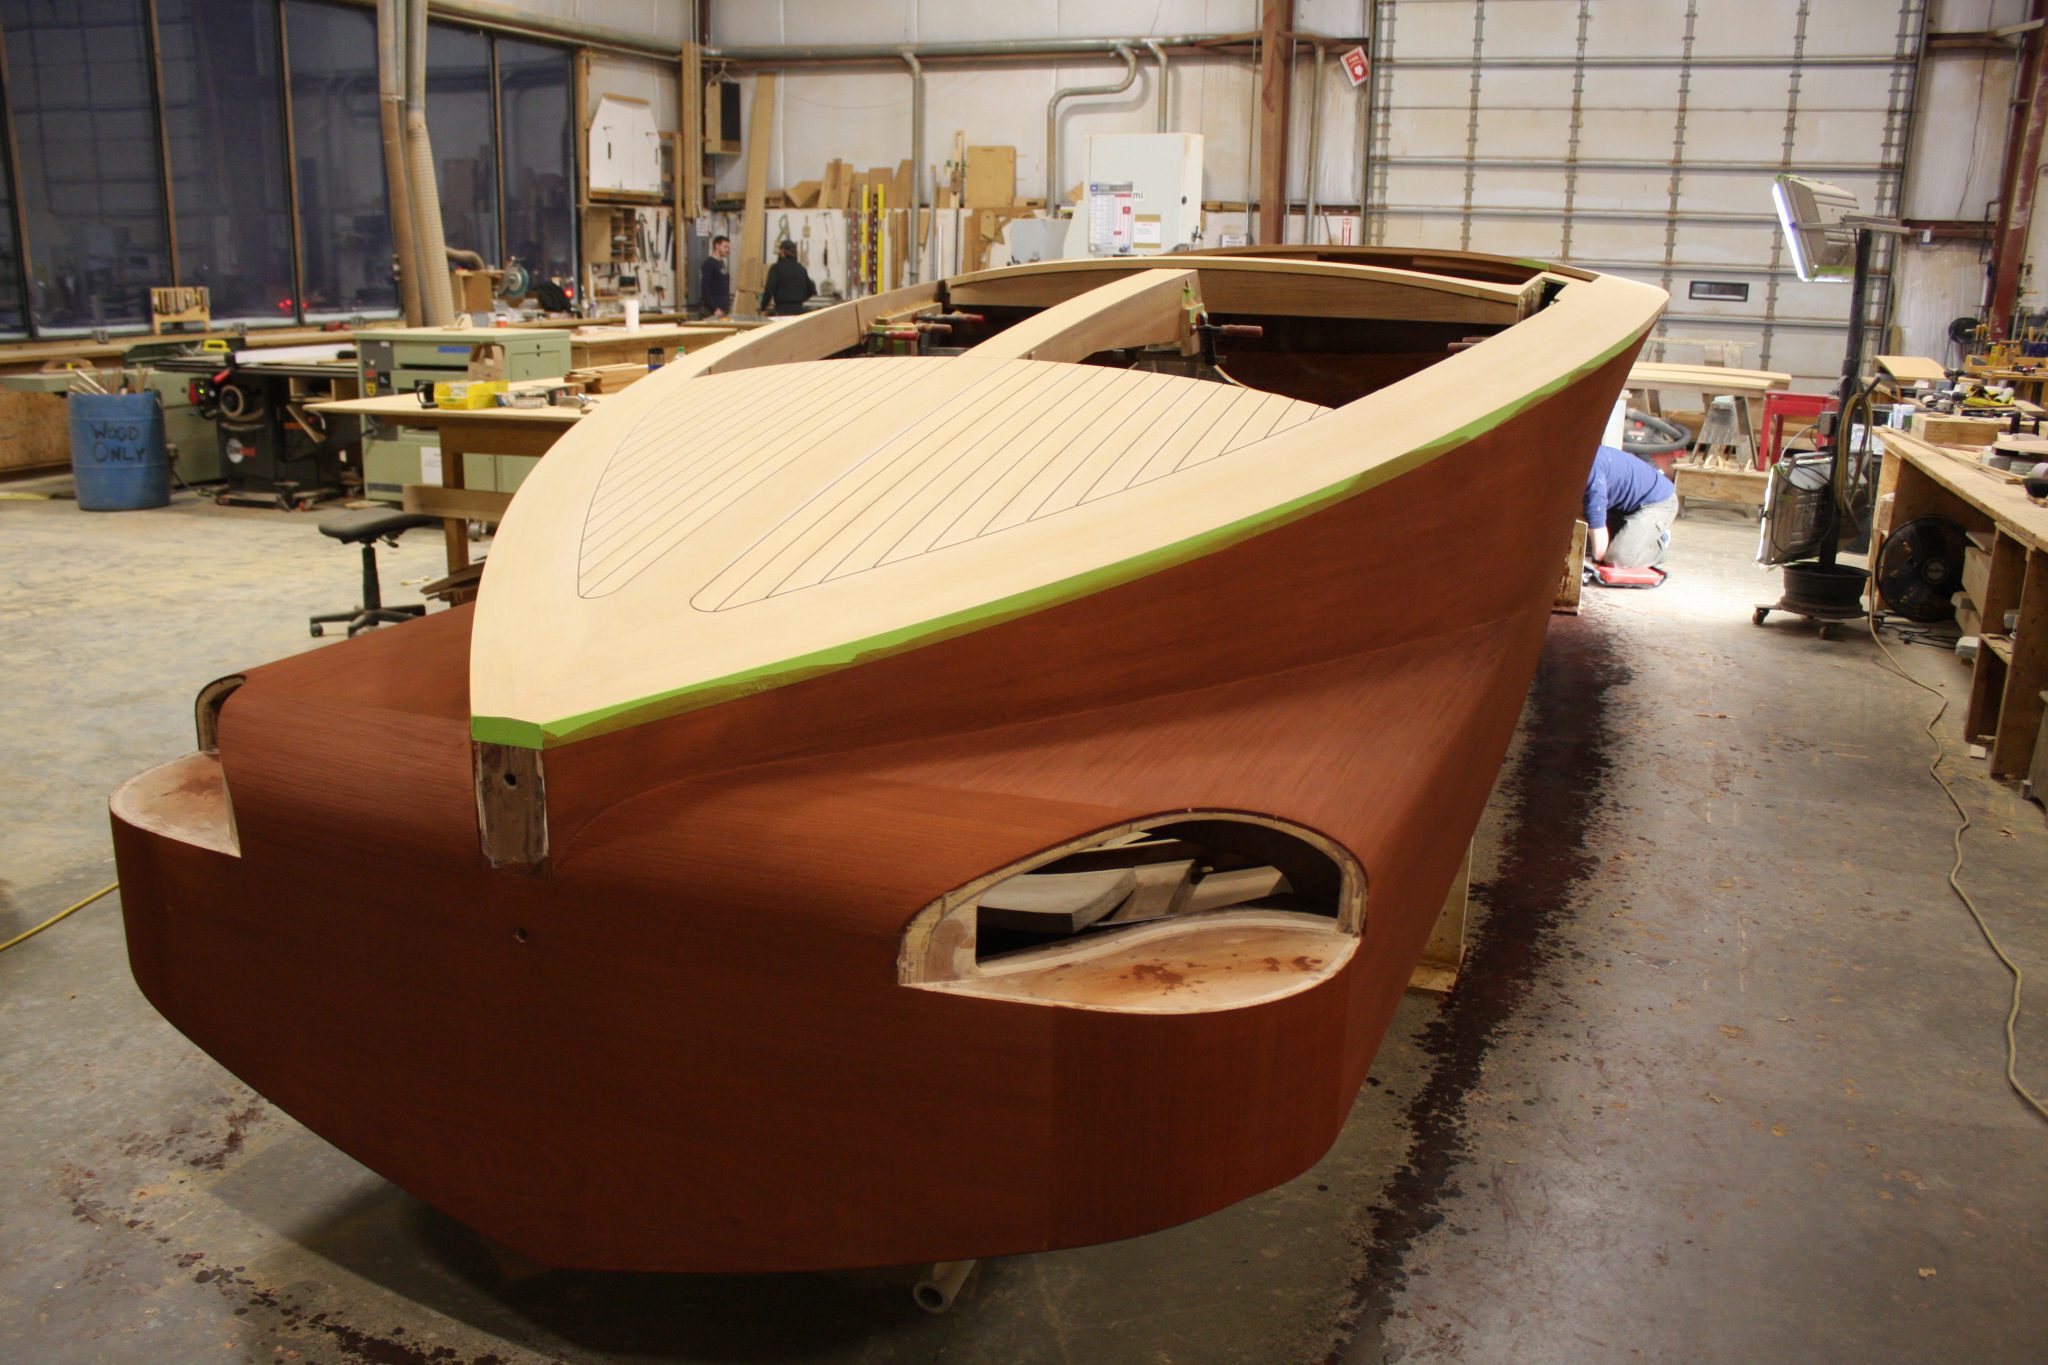 Varnish applied to hull